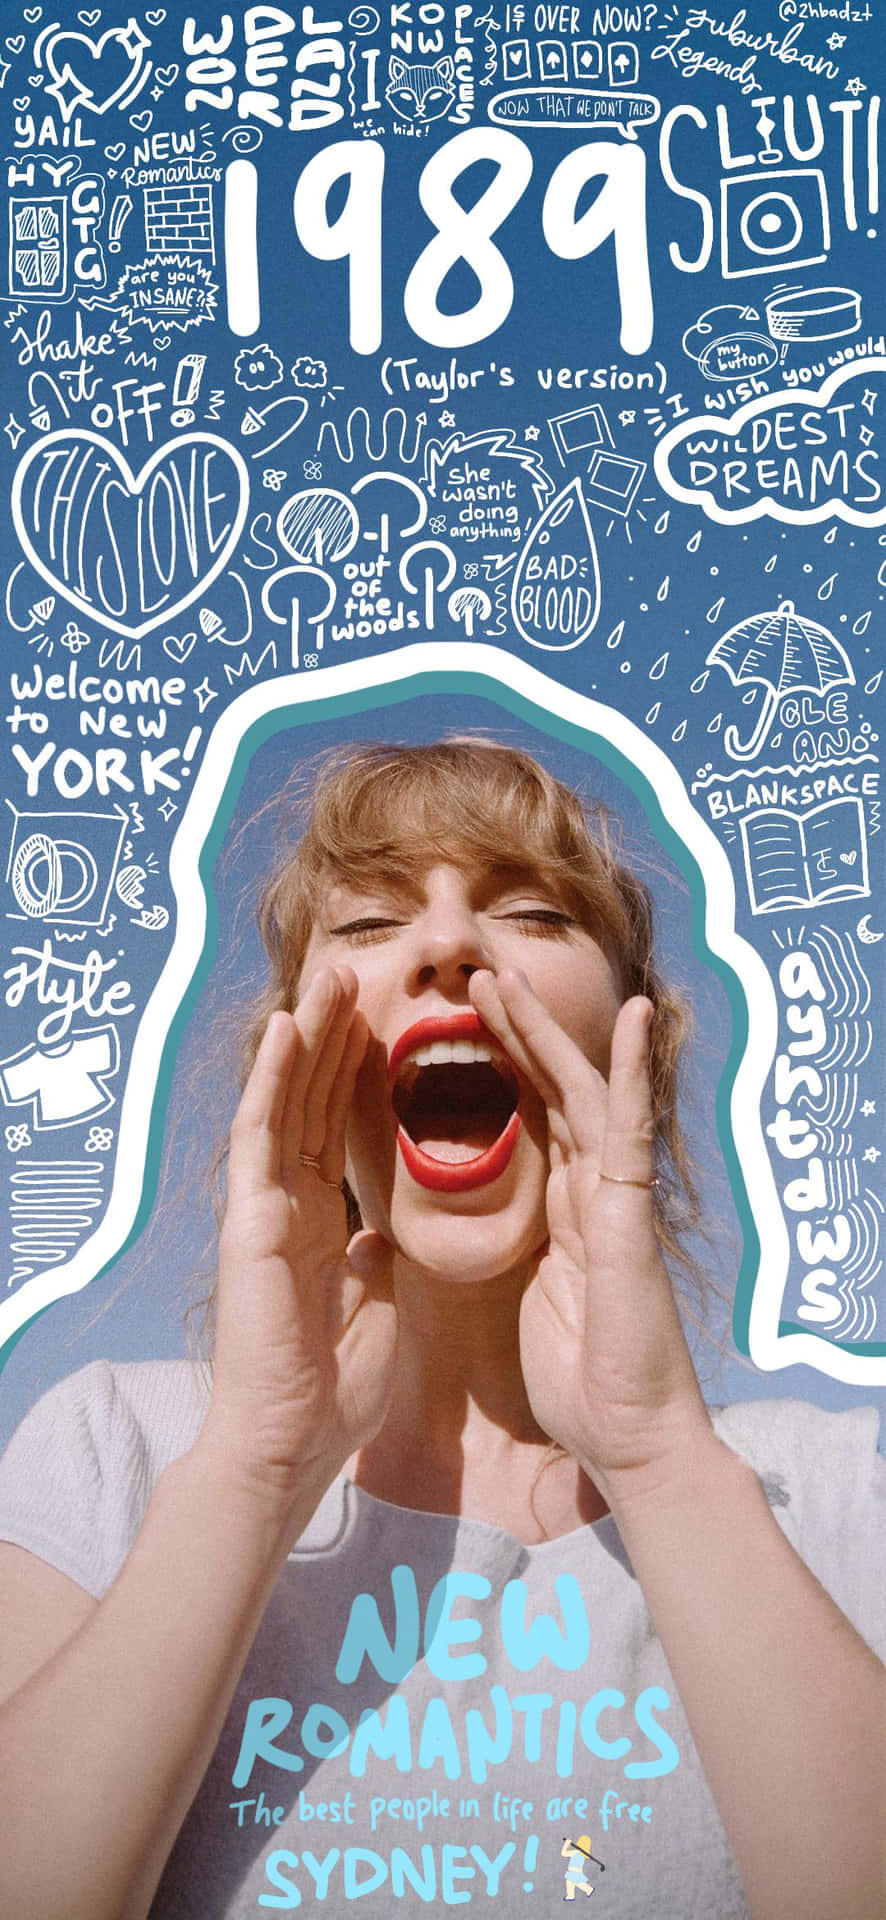 1989 Taylors Version Album Art Wallpaper